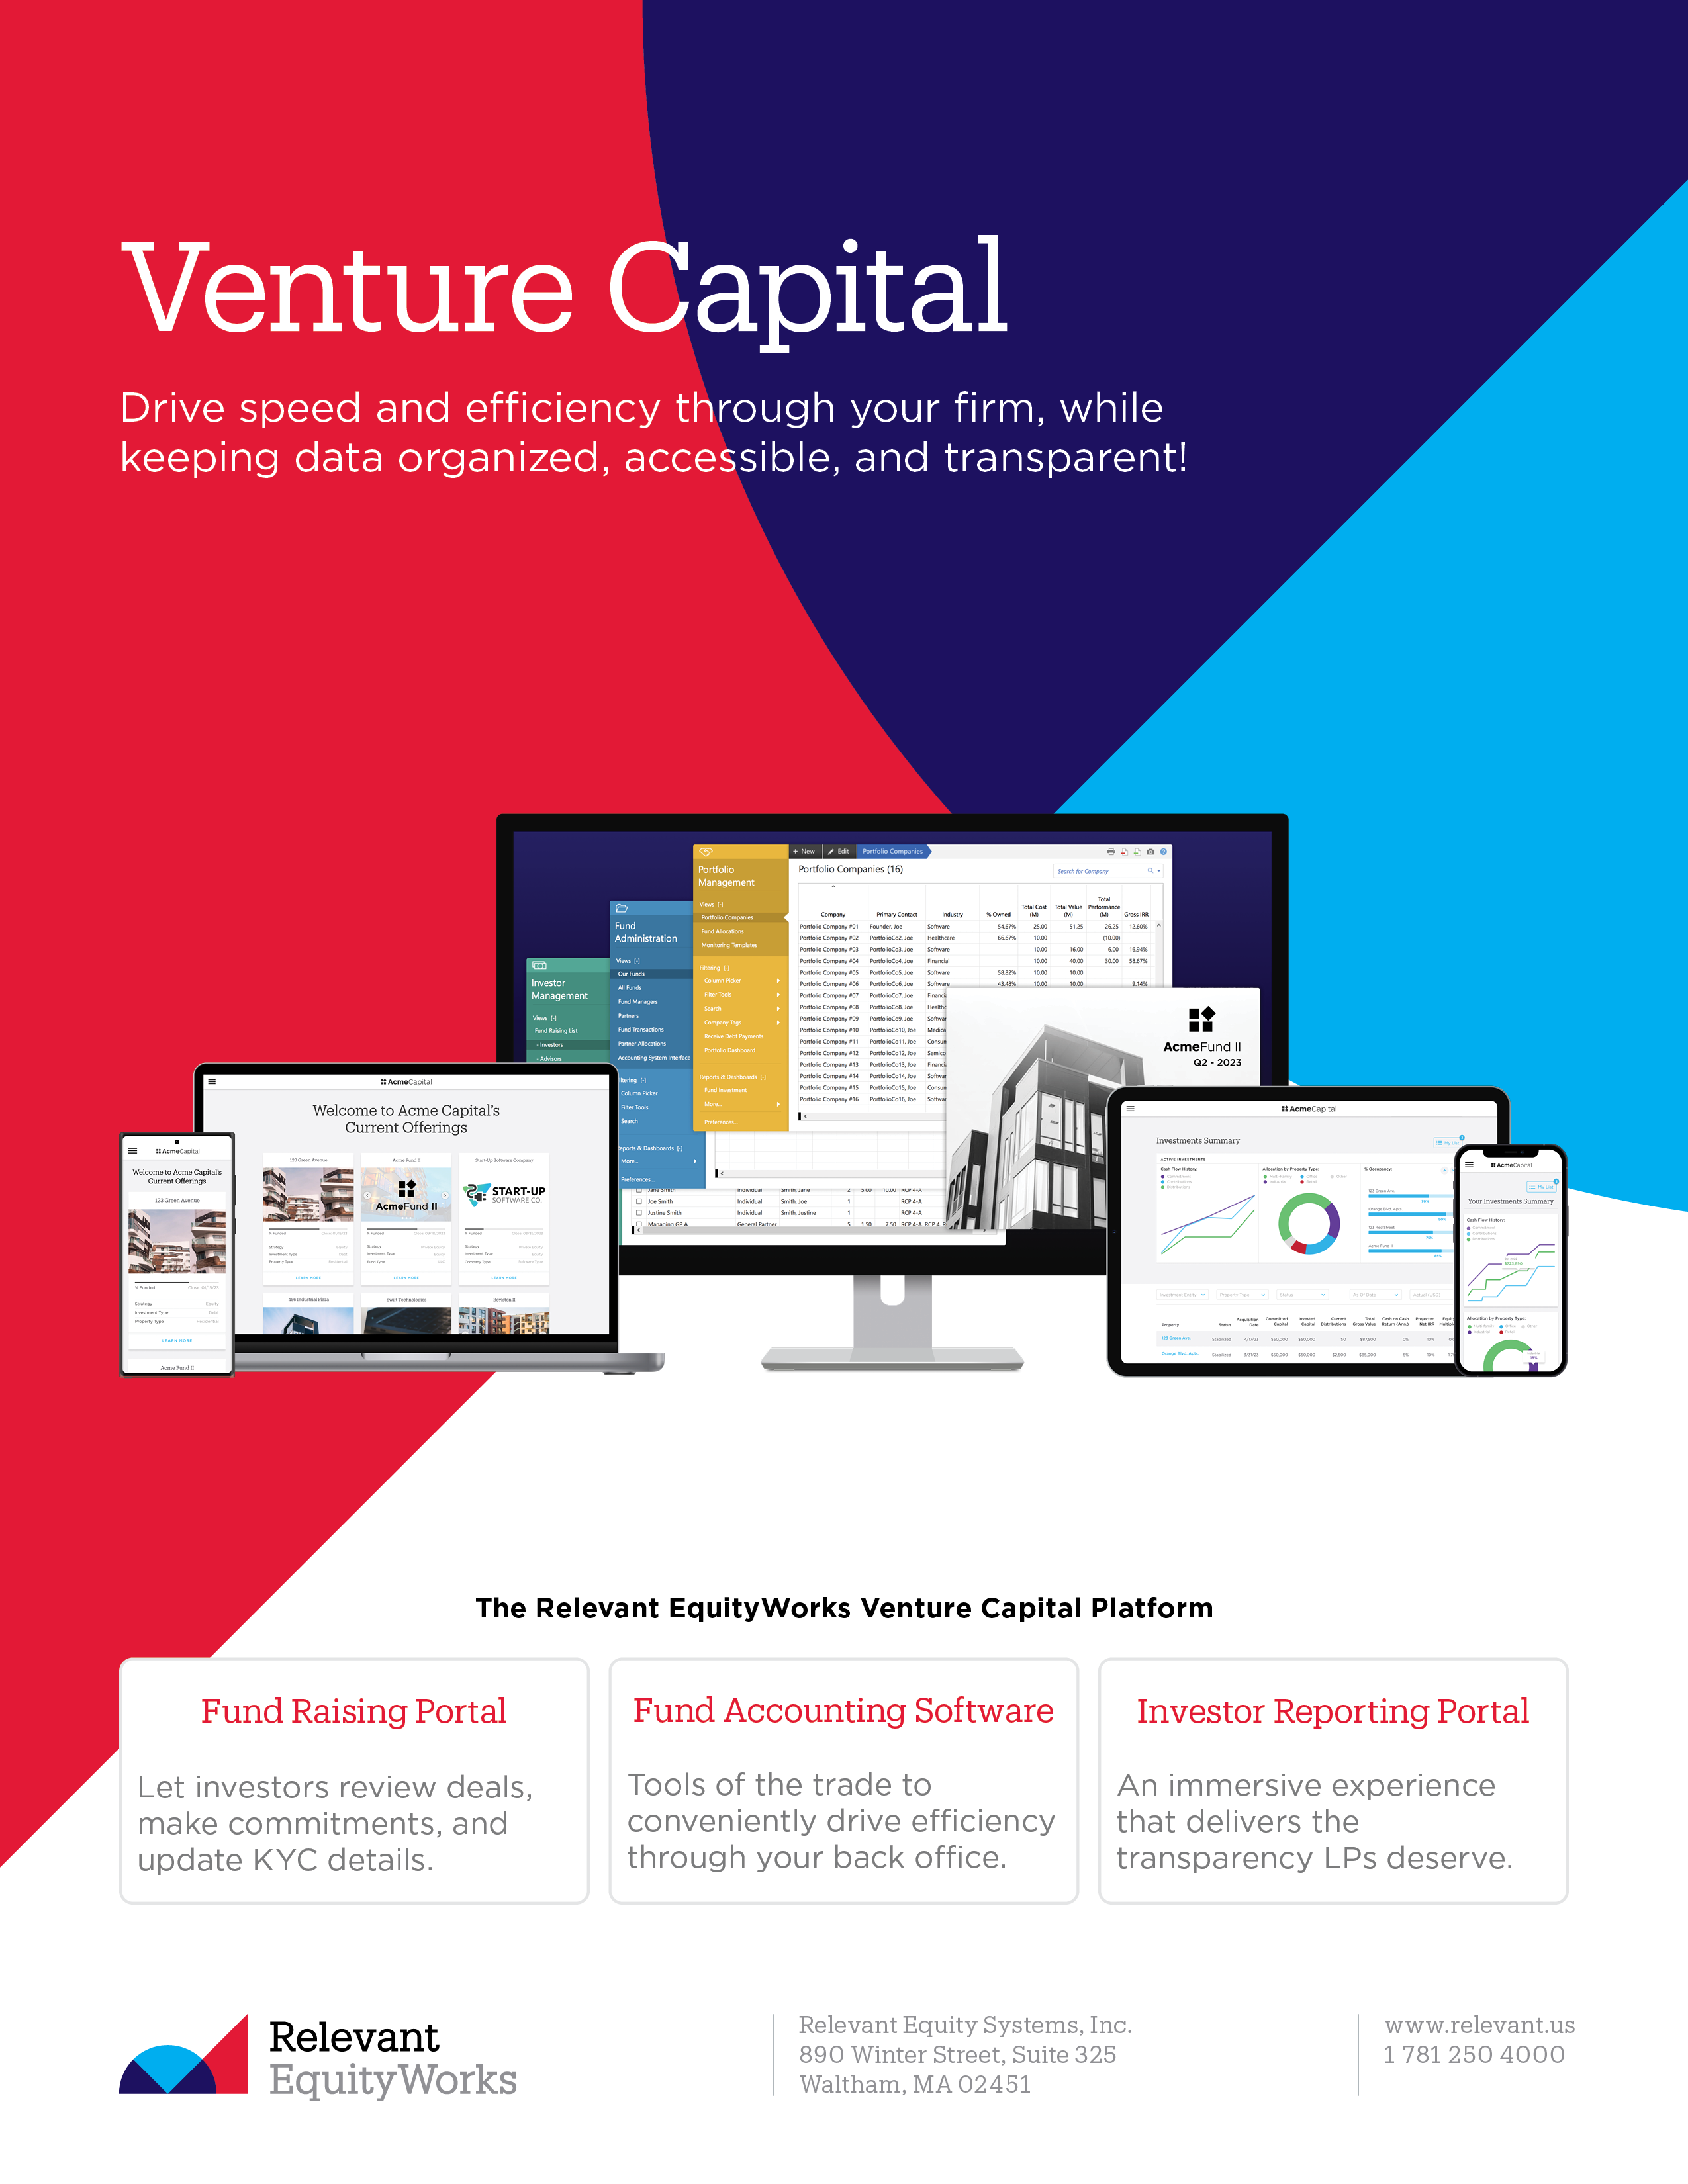 Relevant EquityWorks - Venture Capital handout